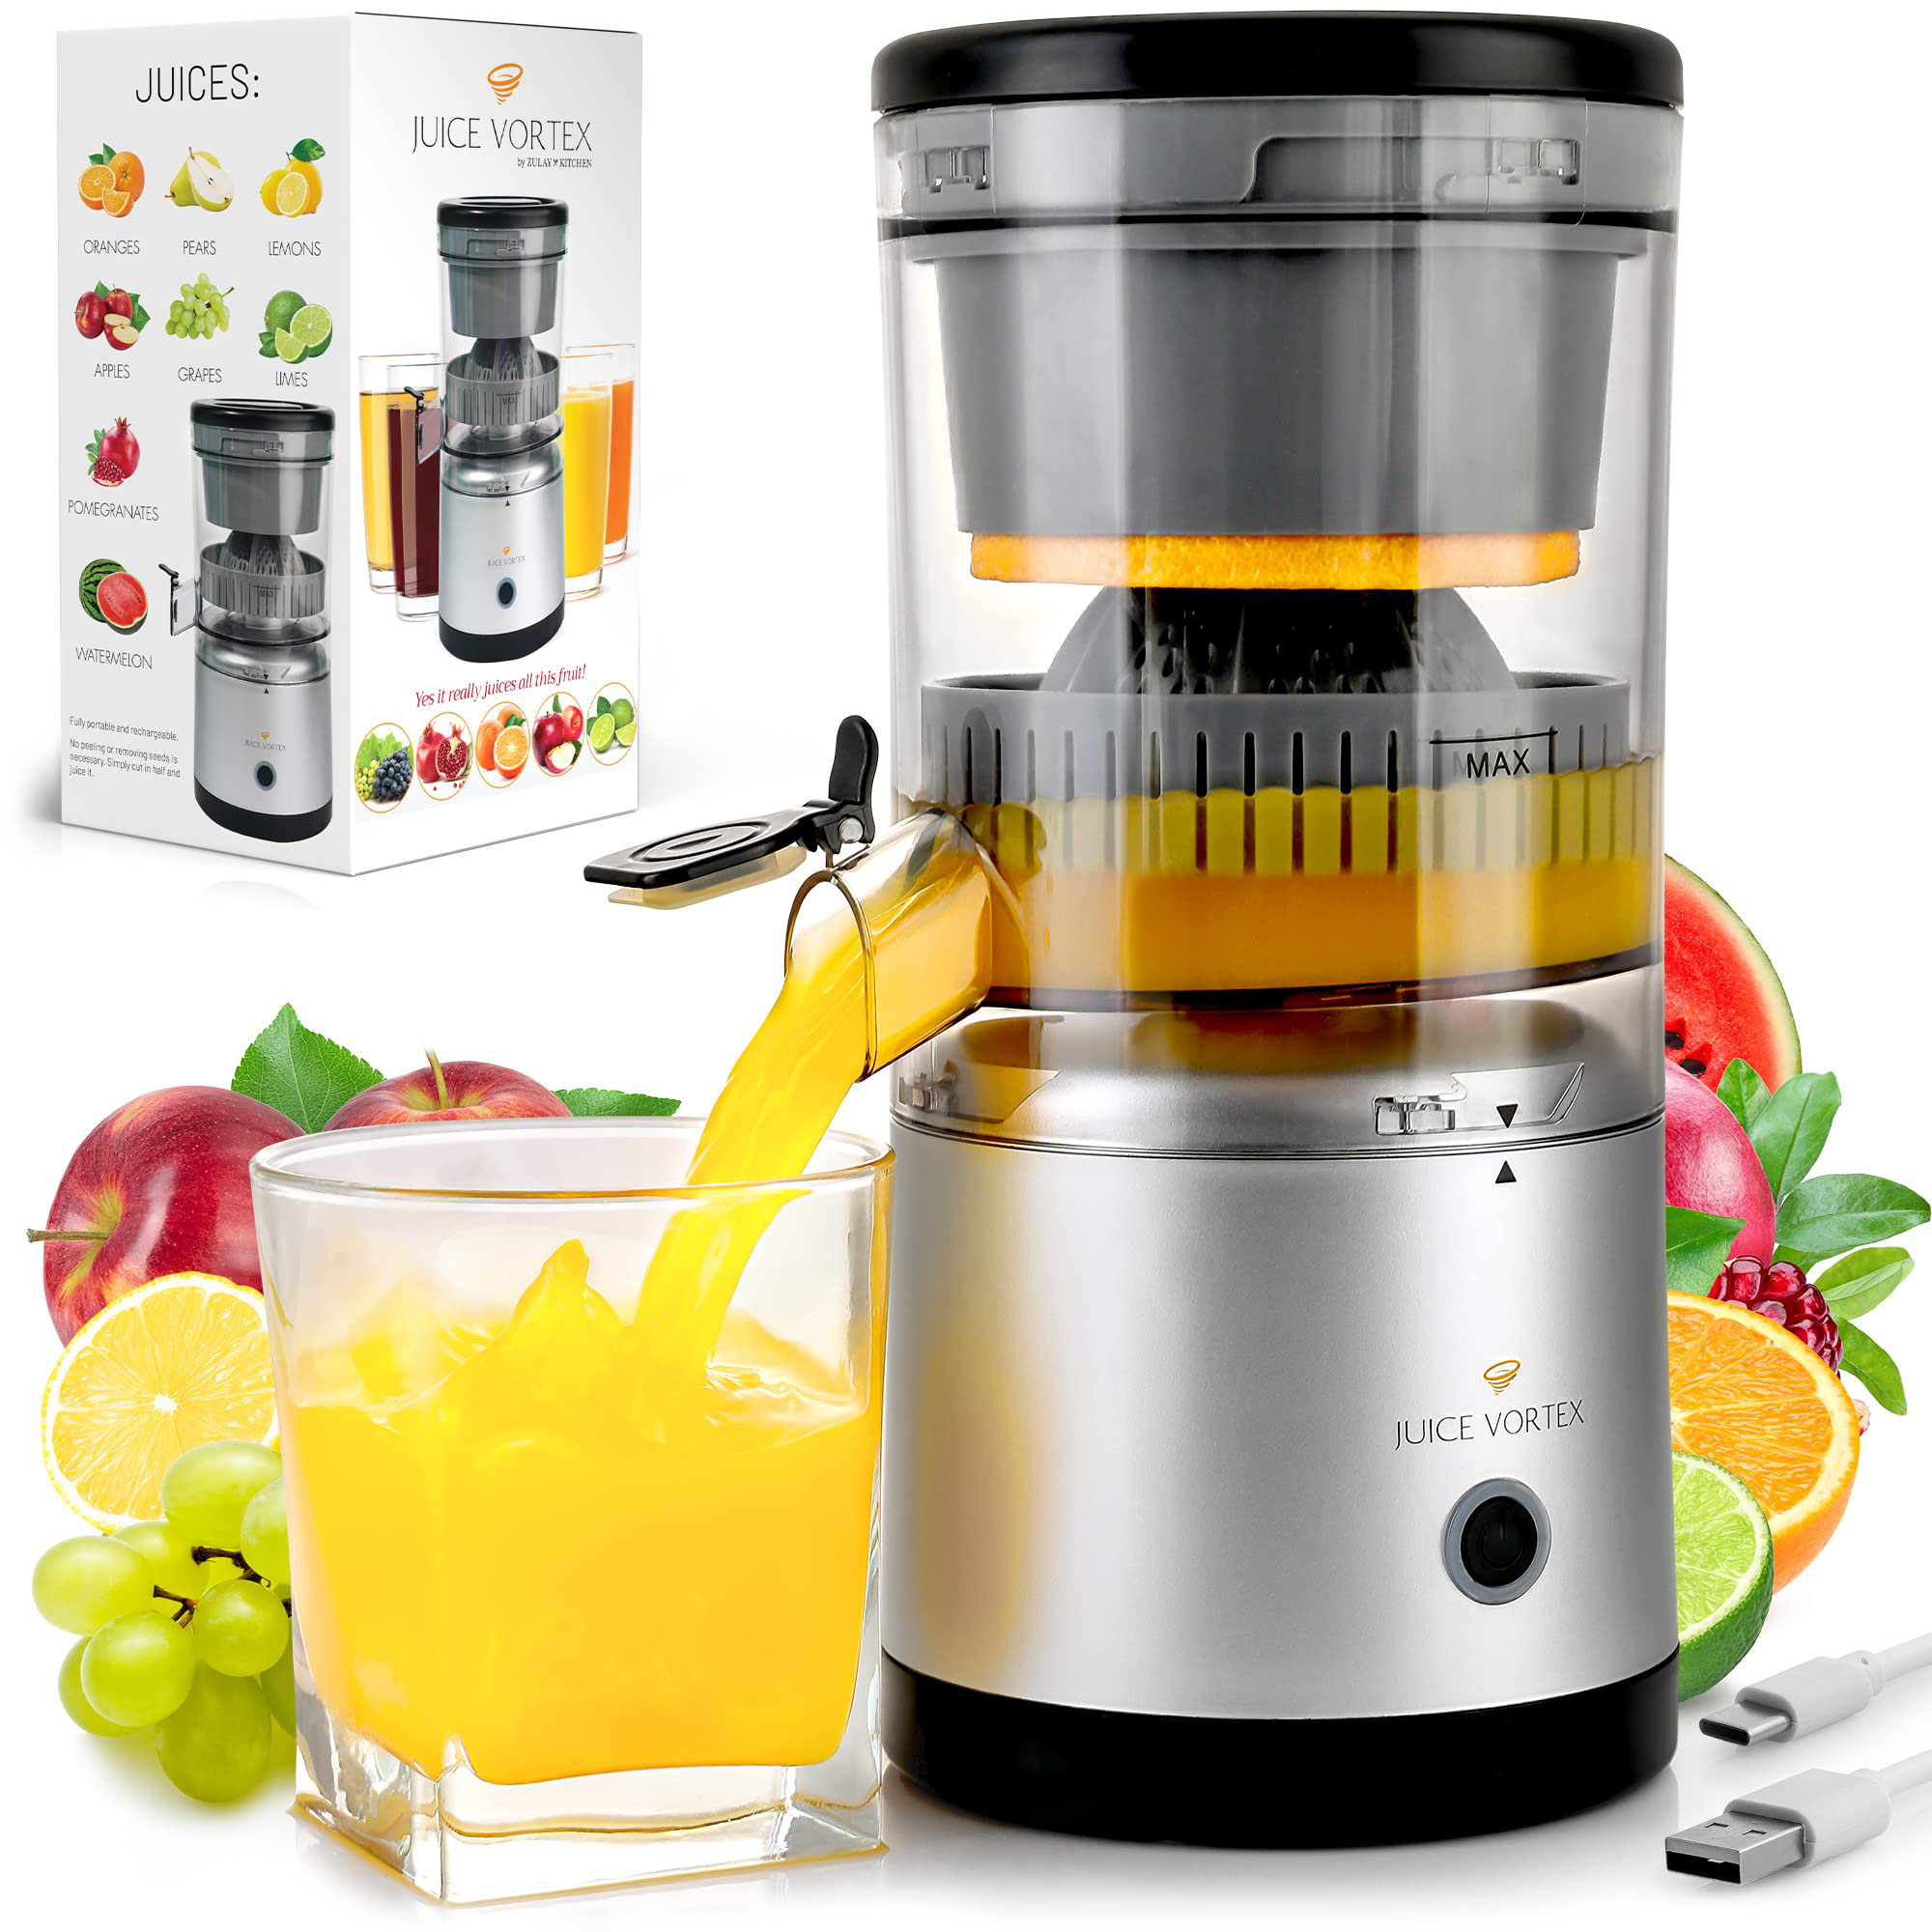 Black Decker Citrus juicer, Juice maker kitchen appliance Stock